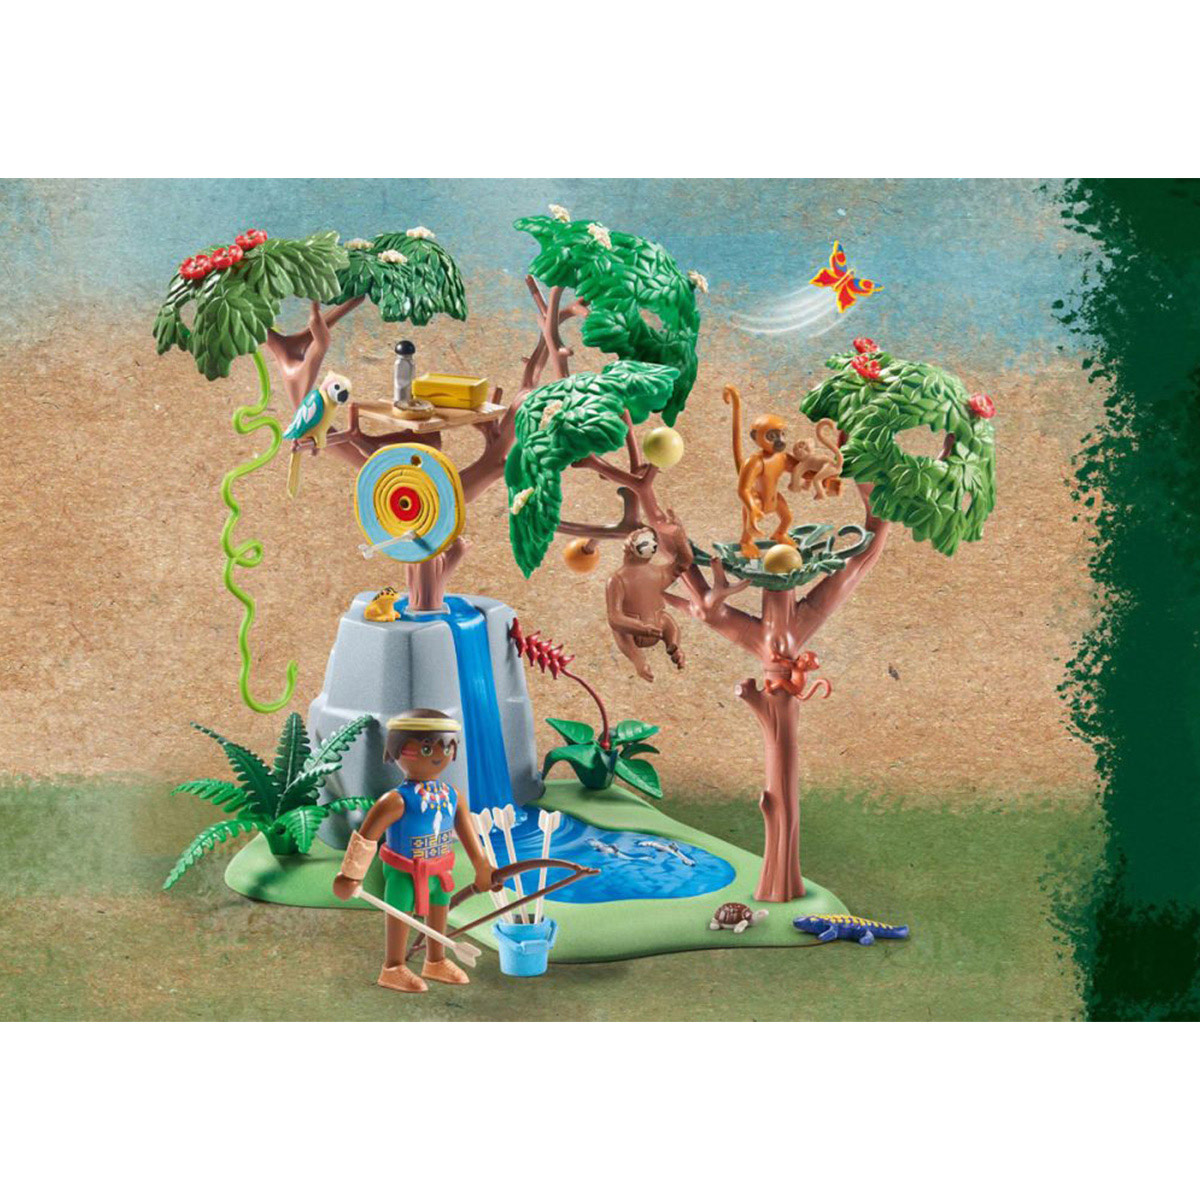 Playmobil - Playground Selva Tropical - Wiltopia 71142